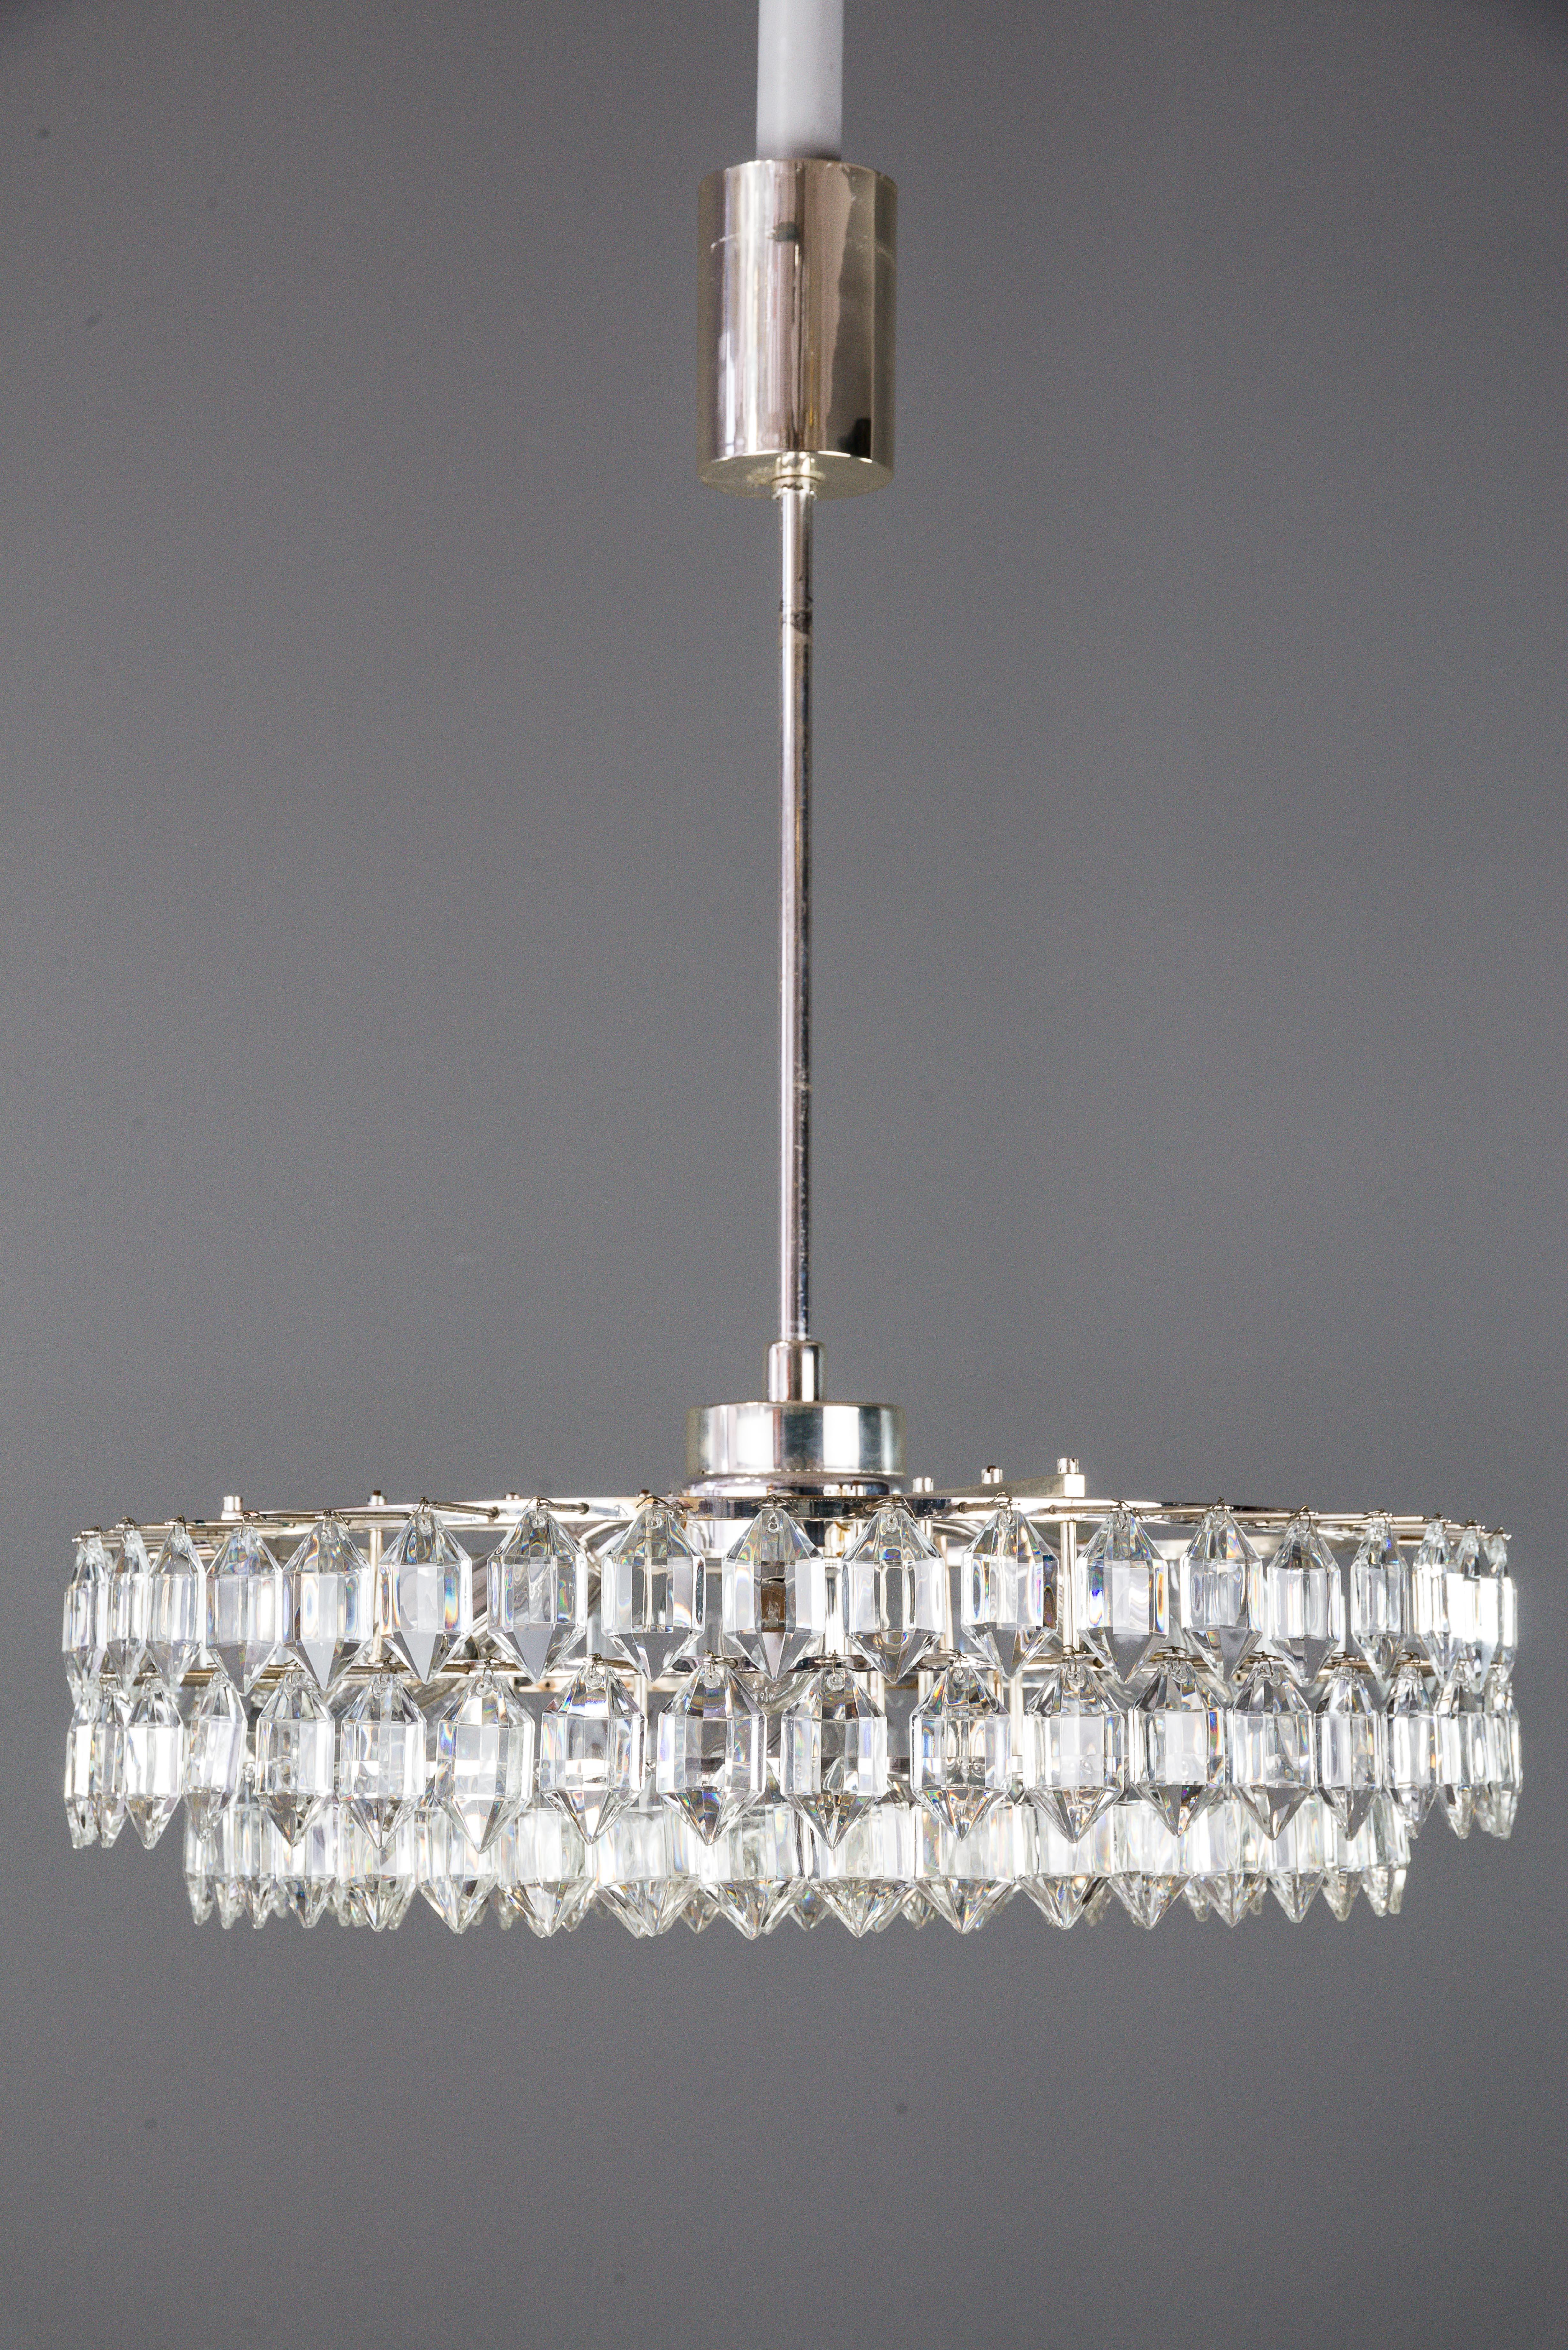 Bakalowits chandelier silver plated, circa 1960s
Original condition.